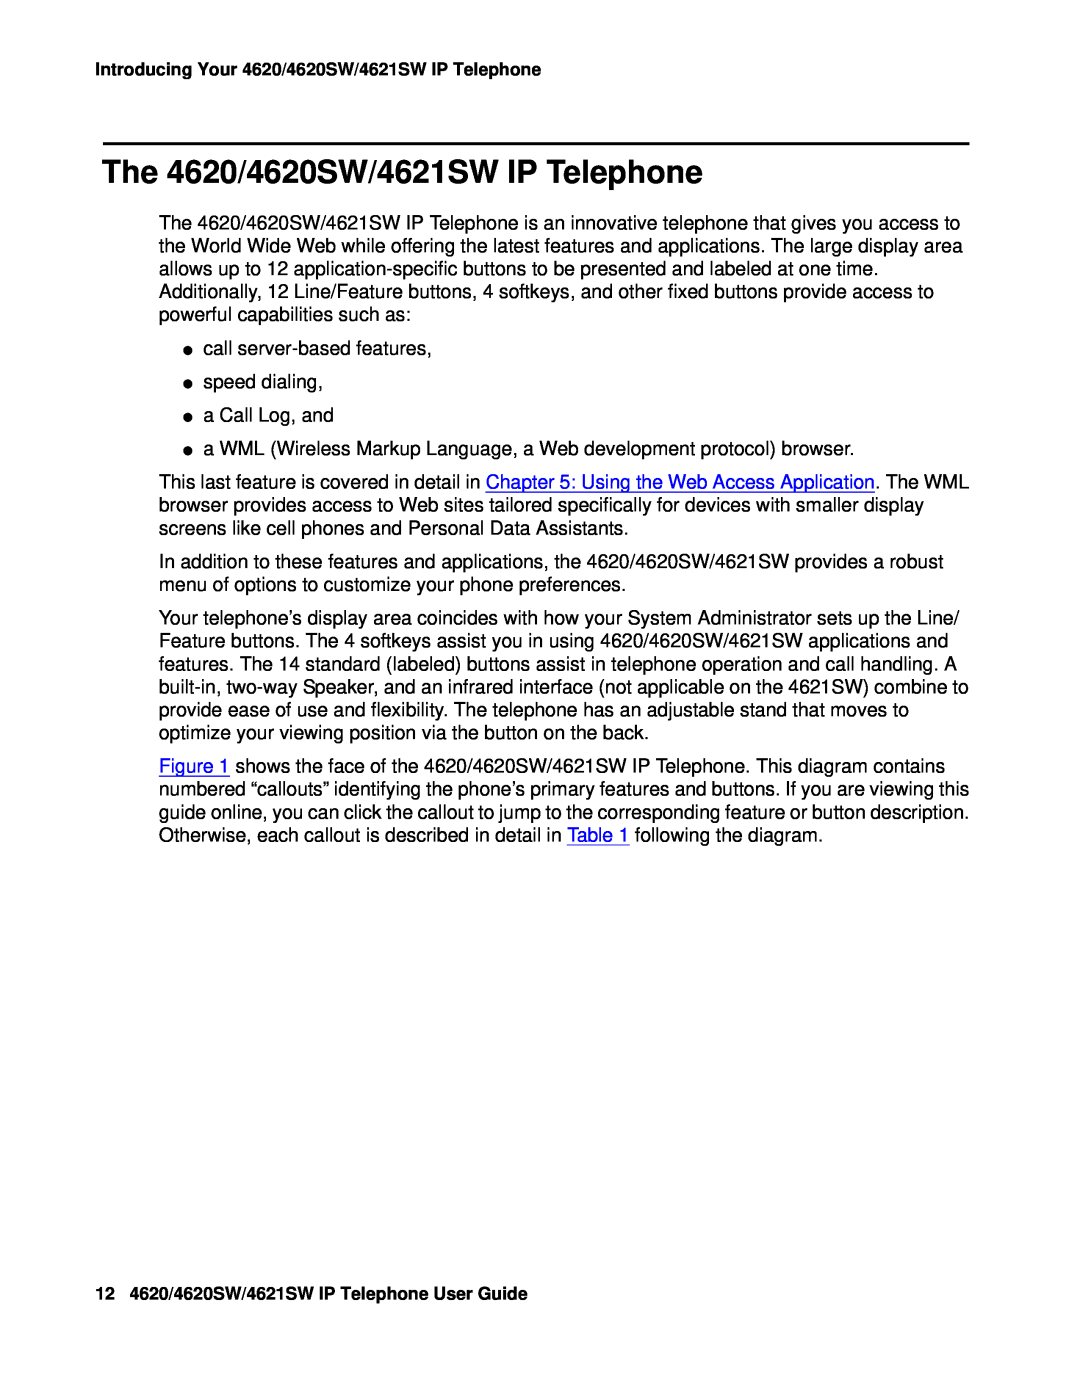 Avaya manual The 4620/4620SW/4621SW IP Telephone 